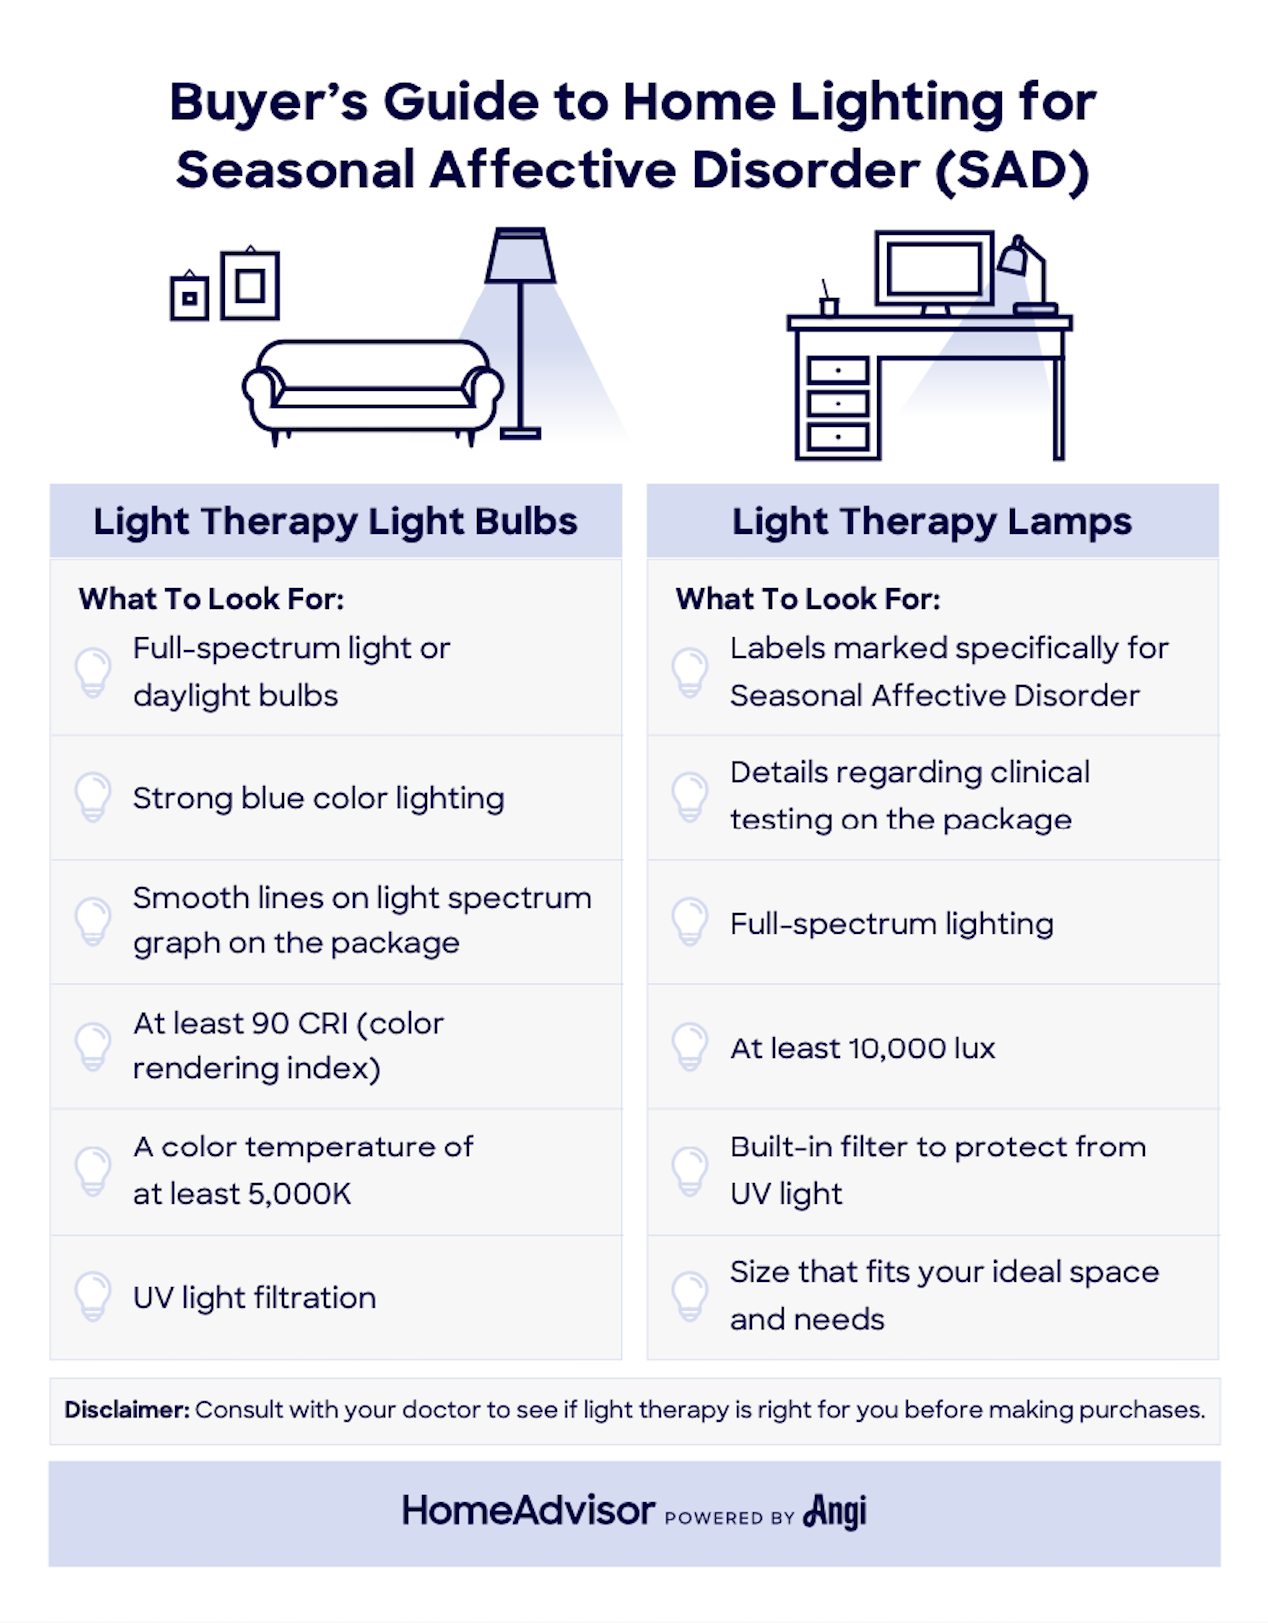 Buyer’s Guide to SAD Home Lighting